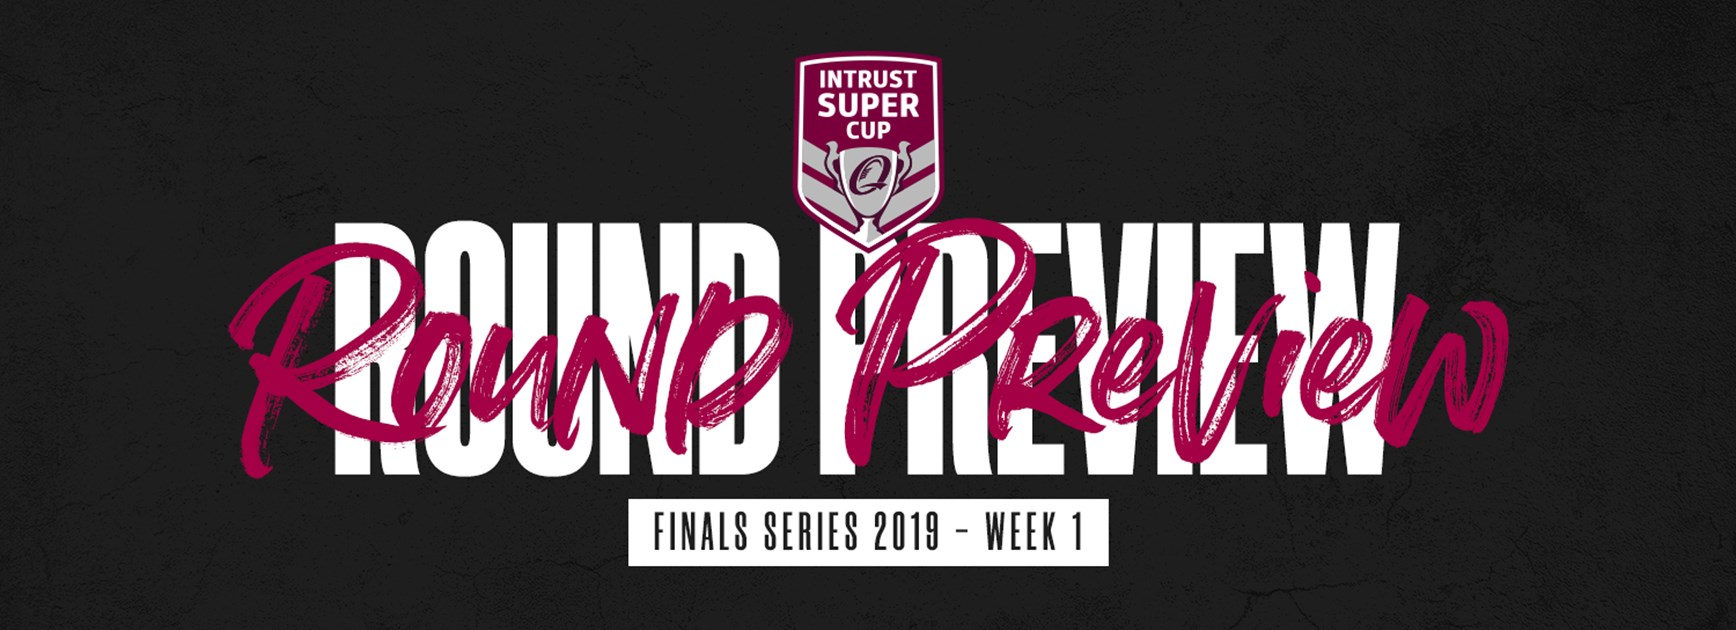 Intrust Super Cup Finals Week 1 preview